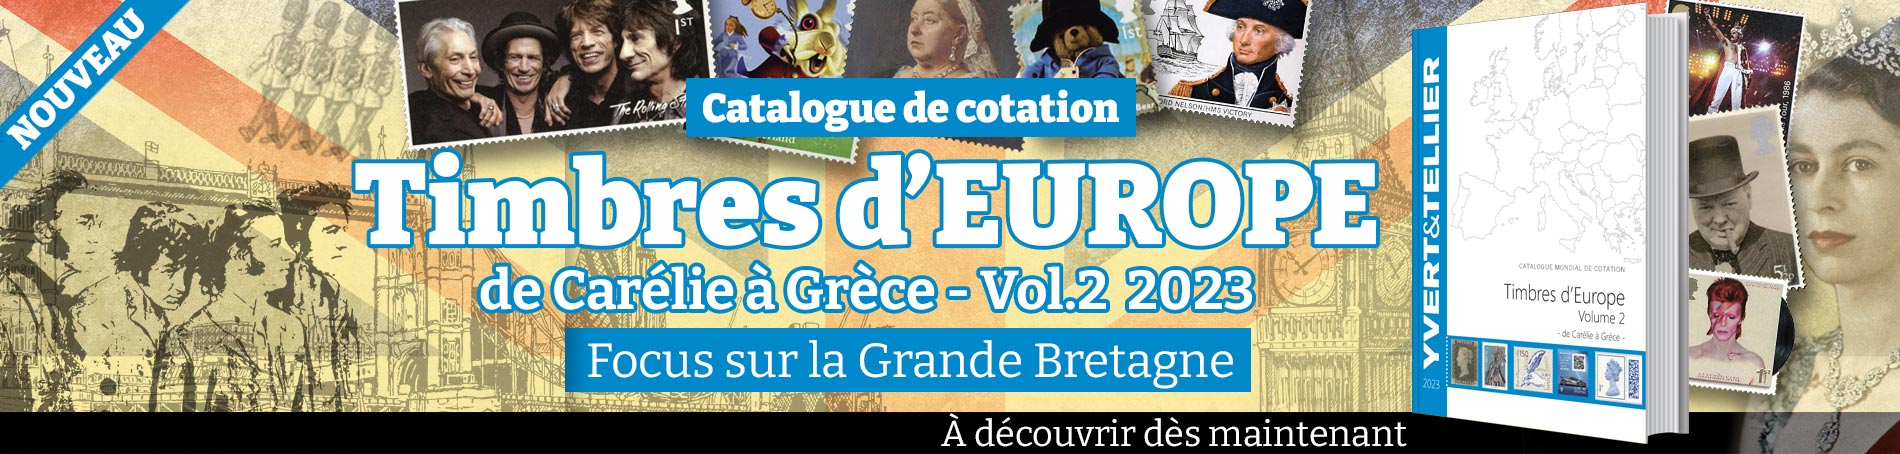 CatalogueEurope Vol.2 2023